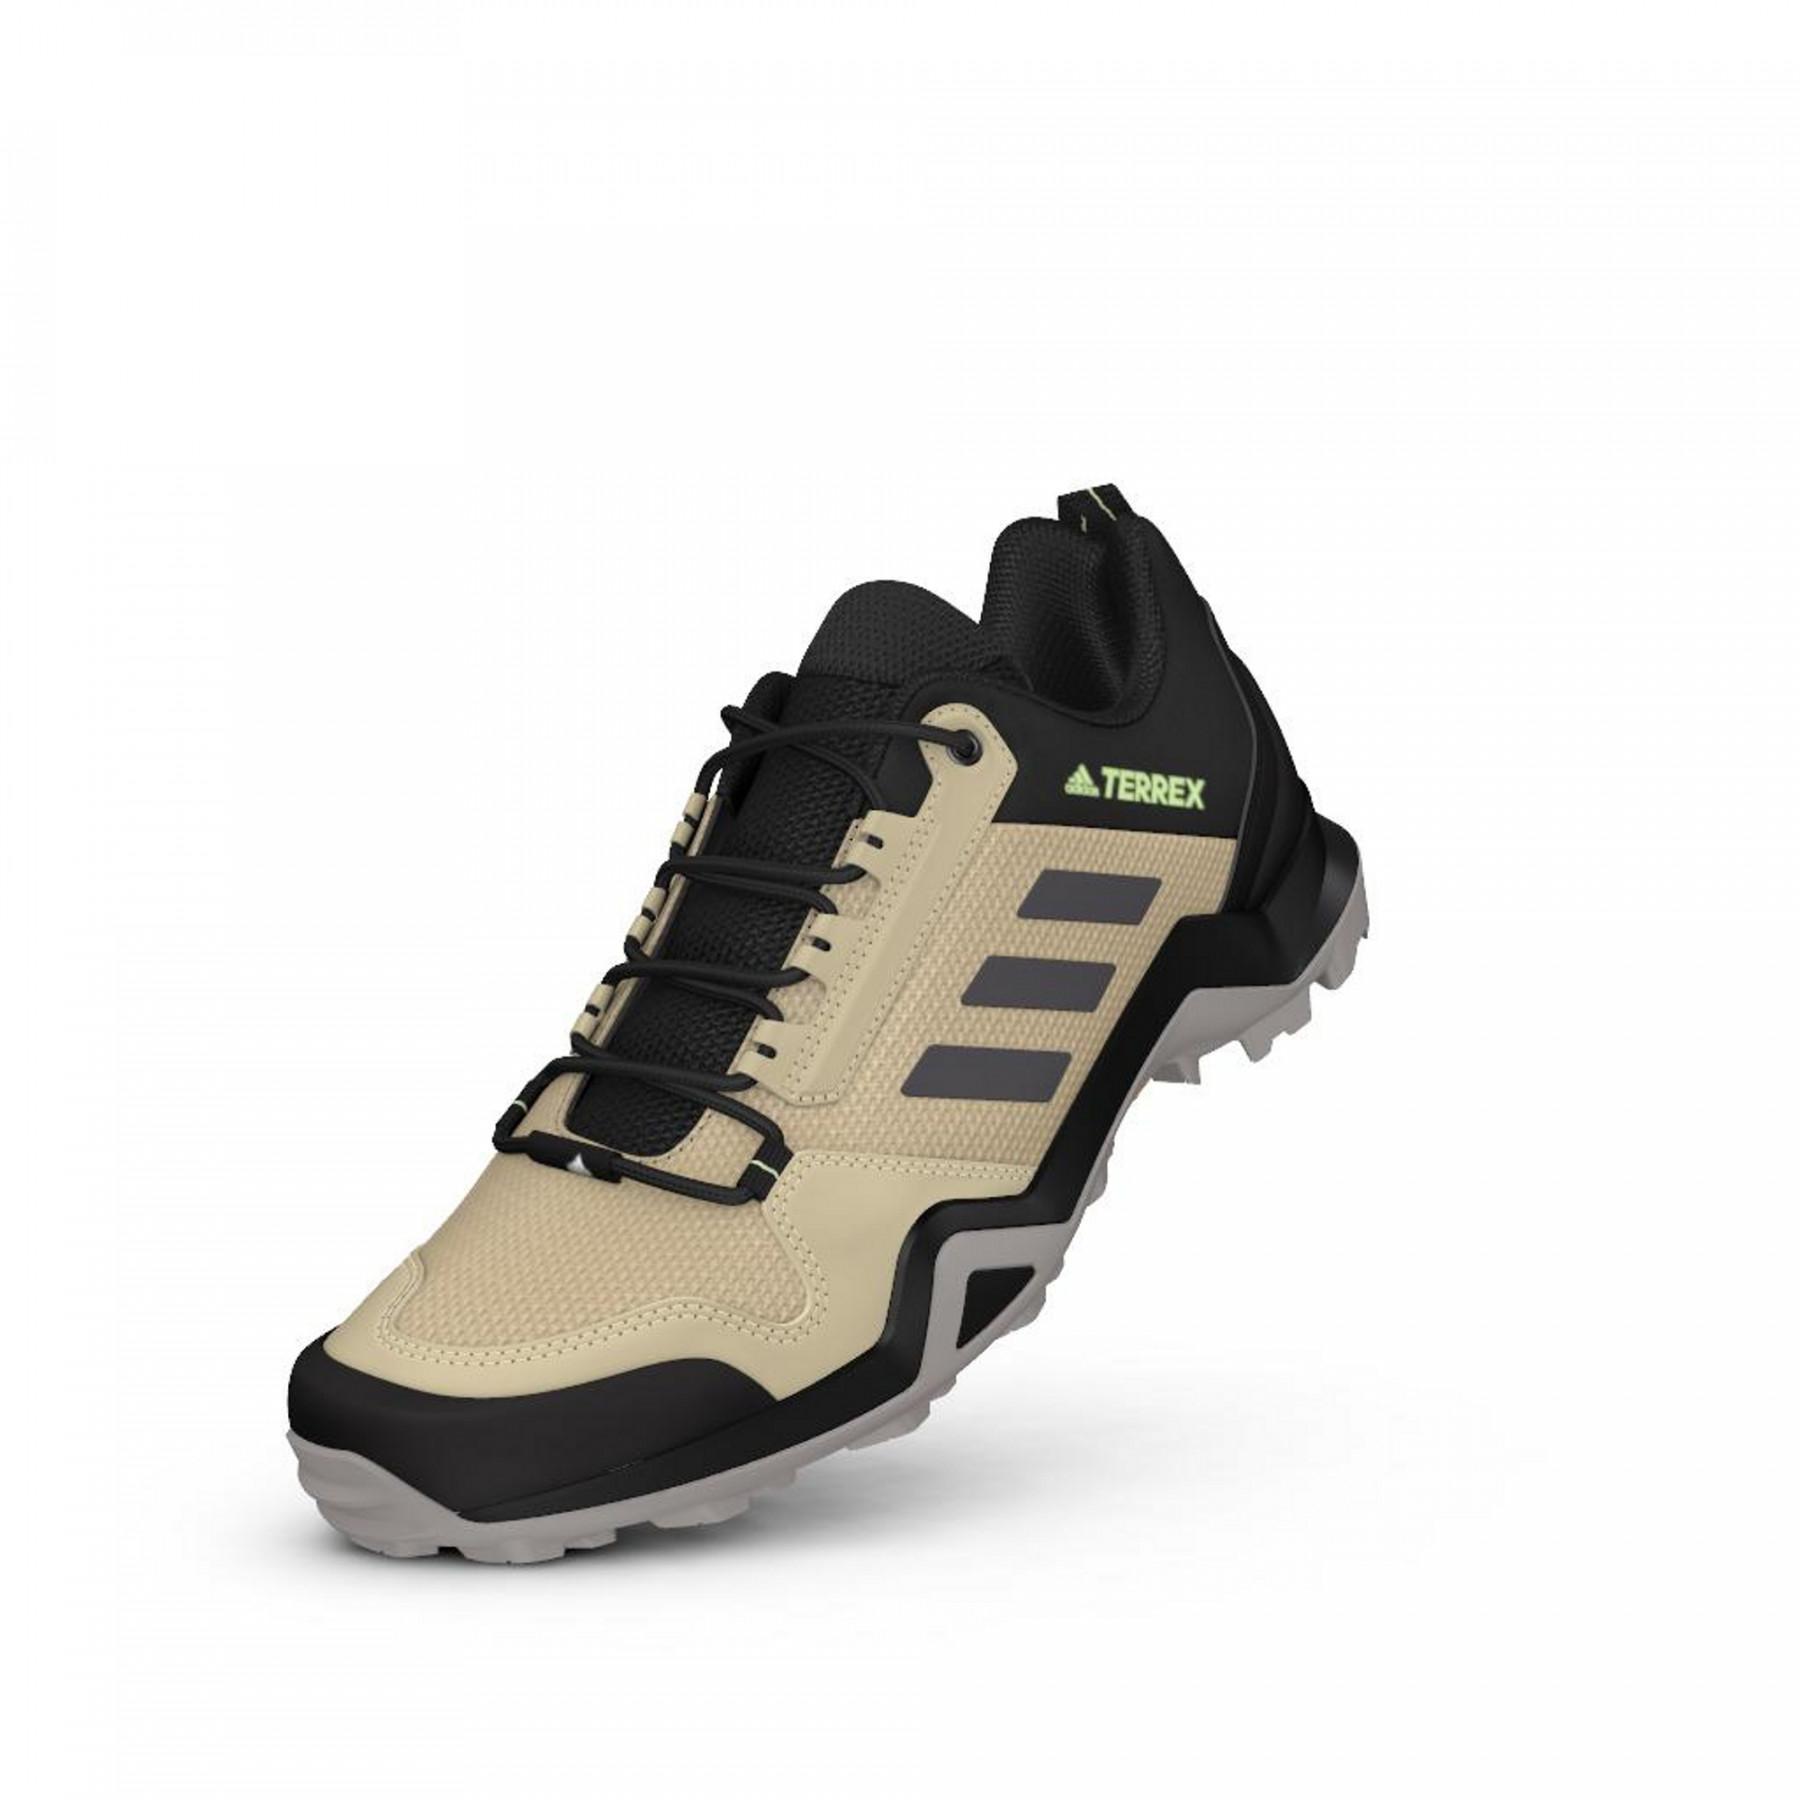 Trail schoenen adidas Terrex AX3